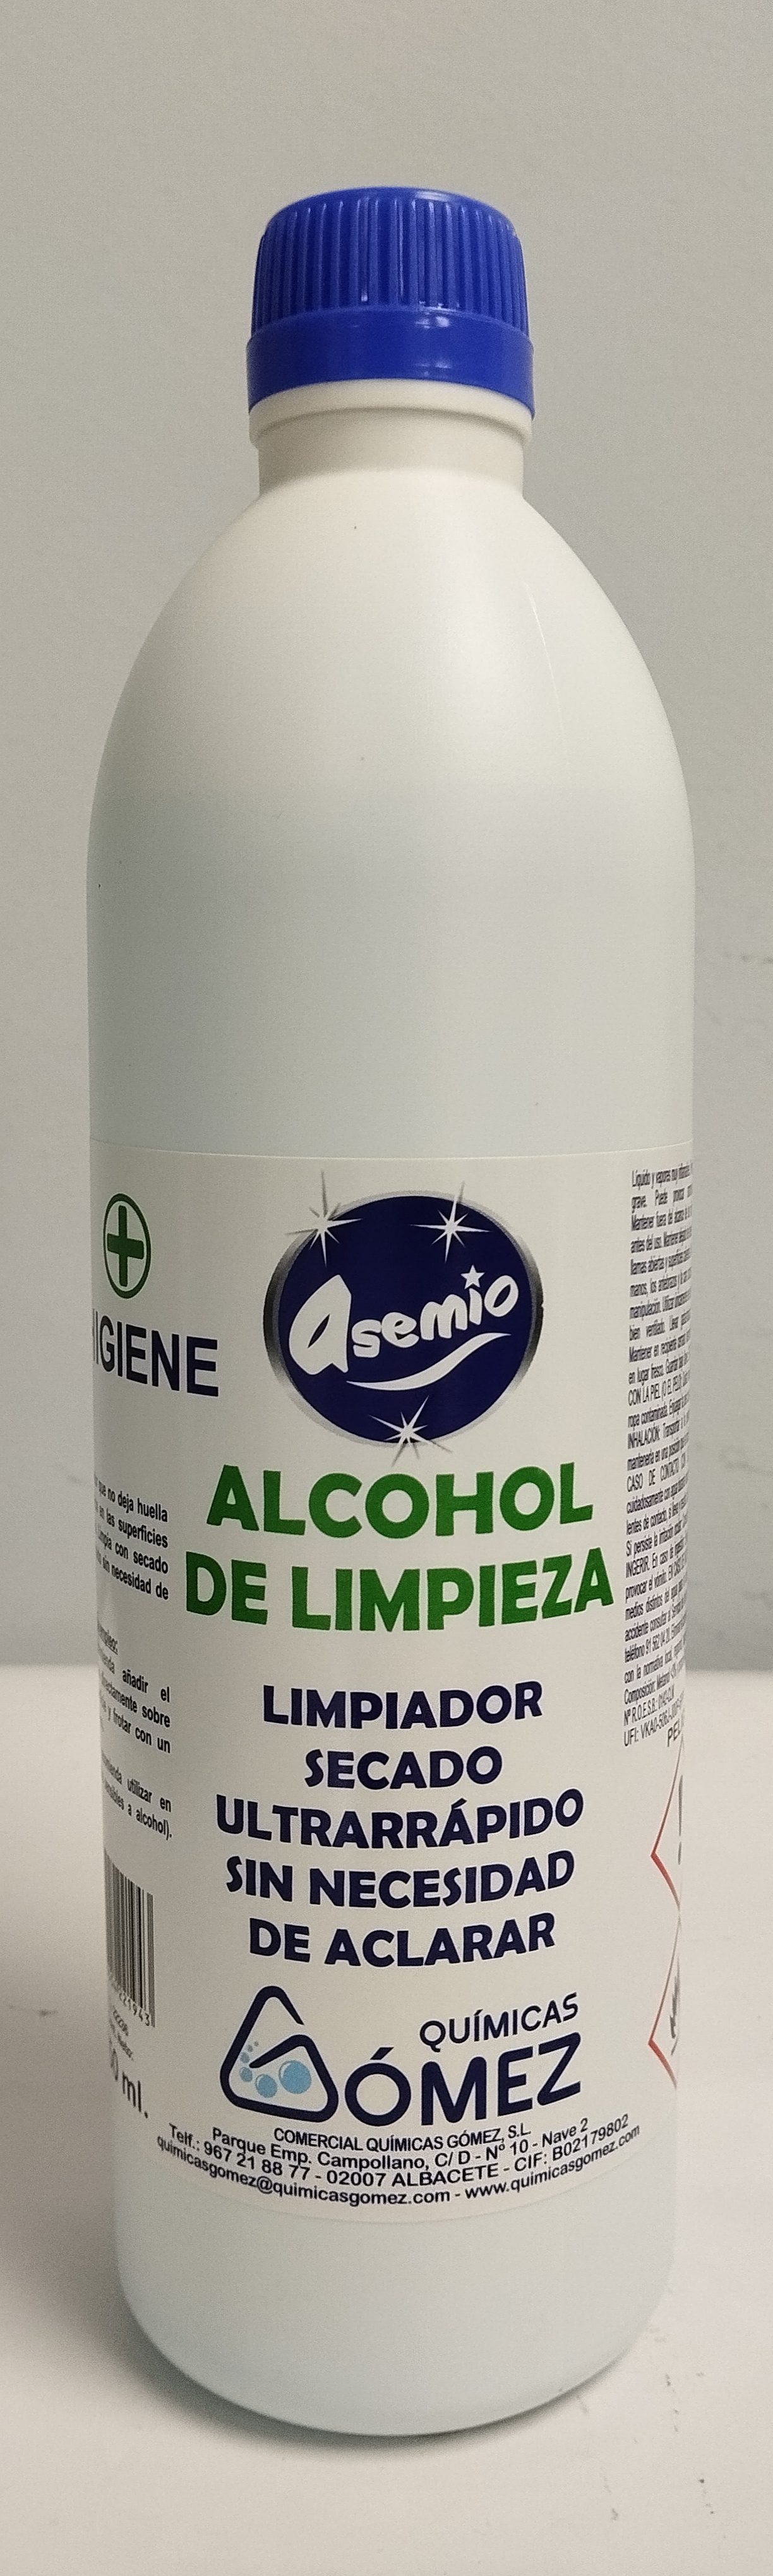 ALCOHOL DE LIMPIEZA ASEMIO 750ML ASEMIO - Cash & Carry Jimenez Prados